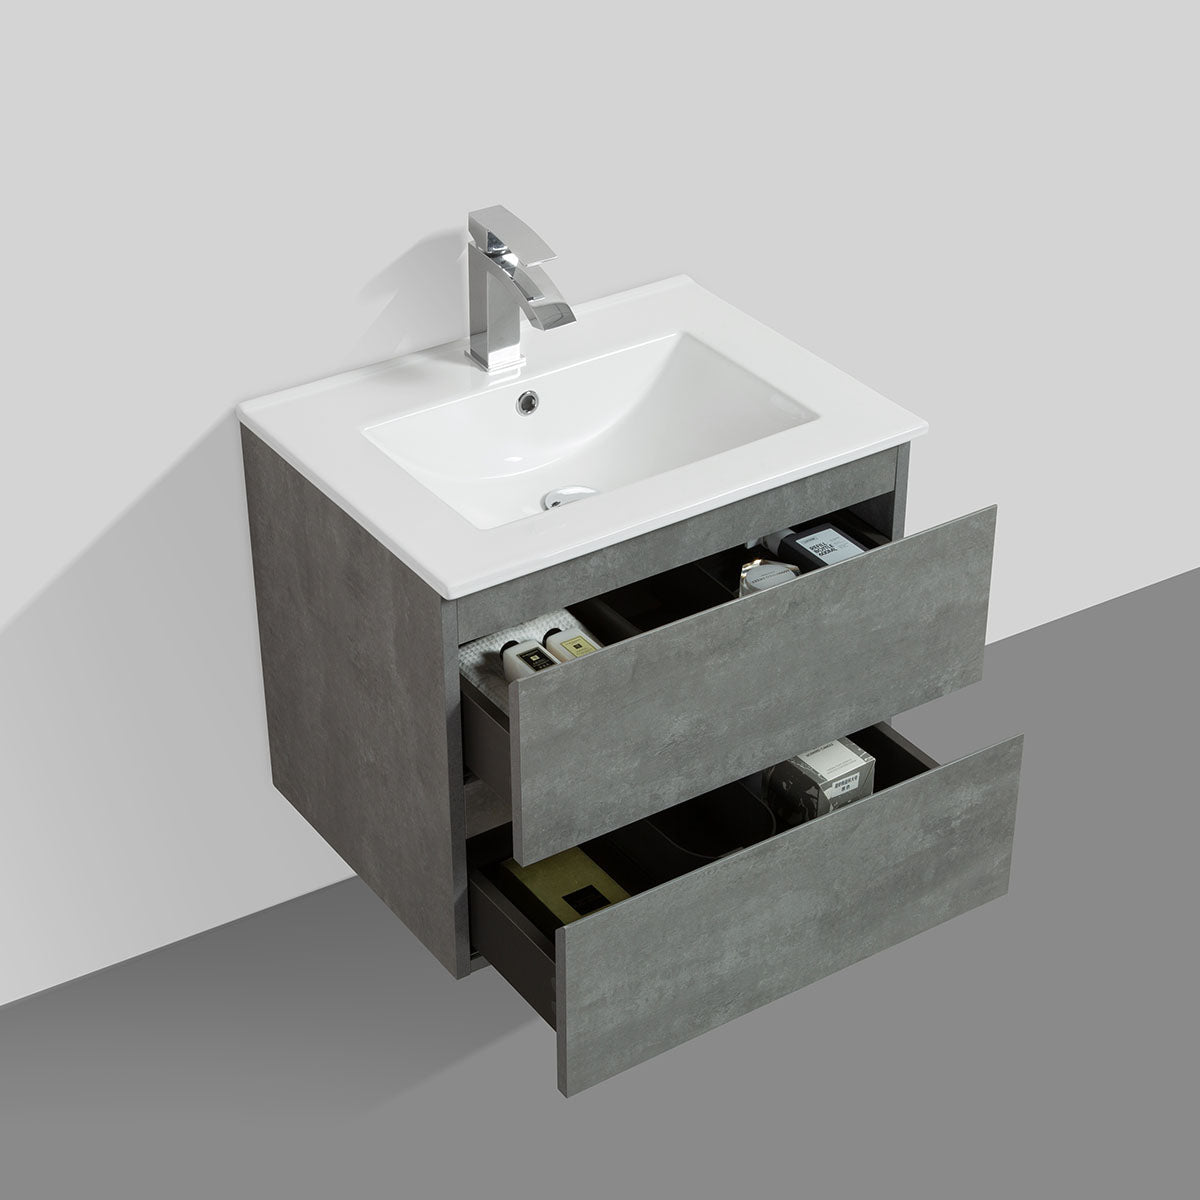 24" Angela Wall Hung Vanity & Ceramic Sink (Cement Grey) V9005 Series - iStyle Bath